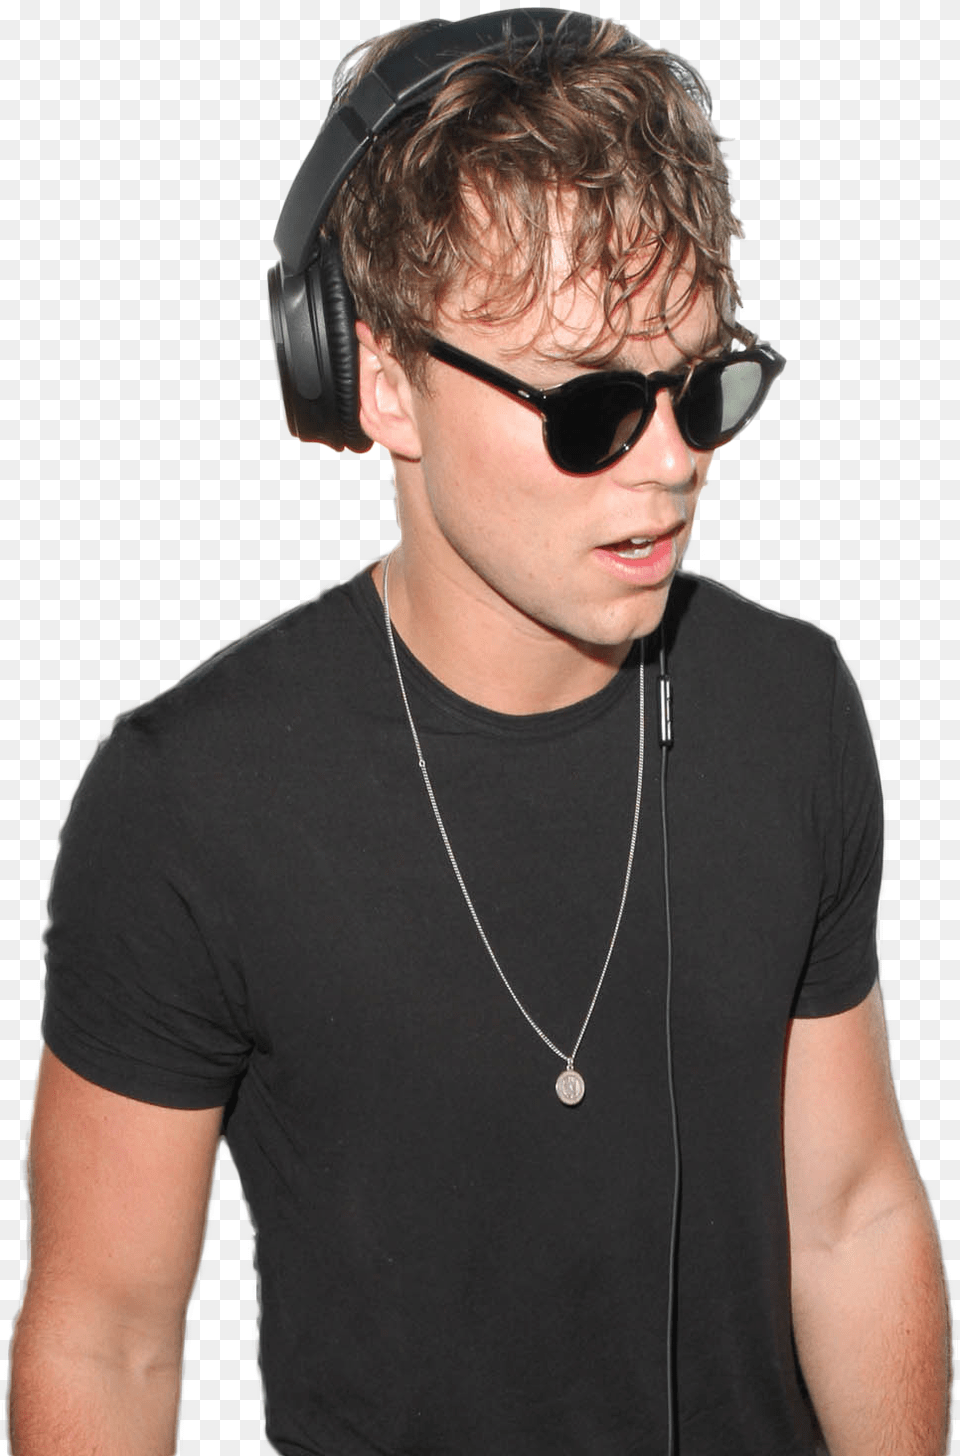 Ashton Irwin Headphones, Accessories, Sunglasses, Jewelry, Necklace Png Image